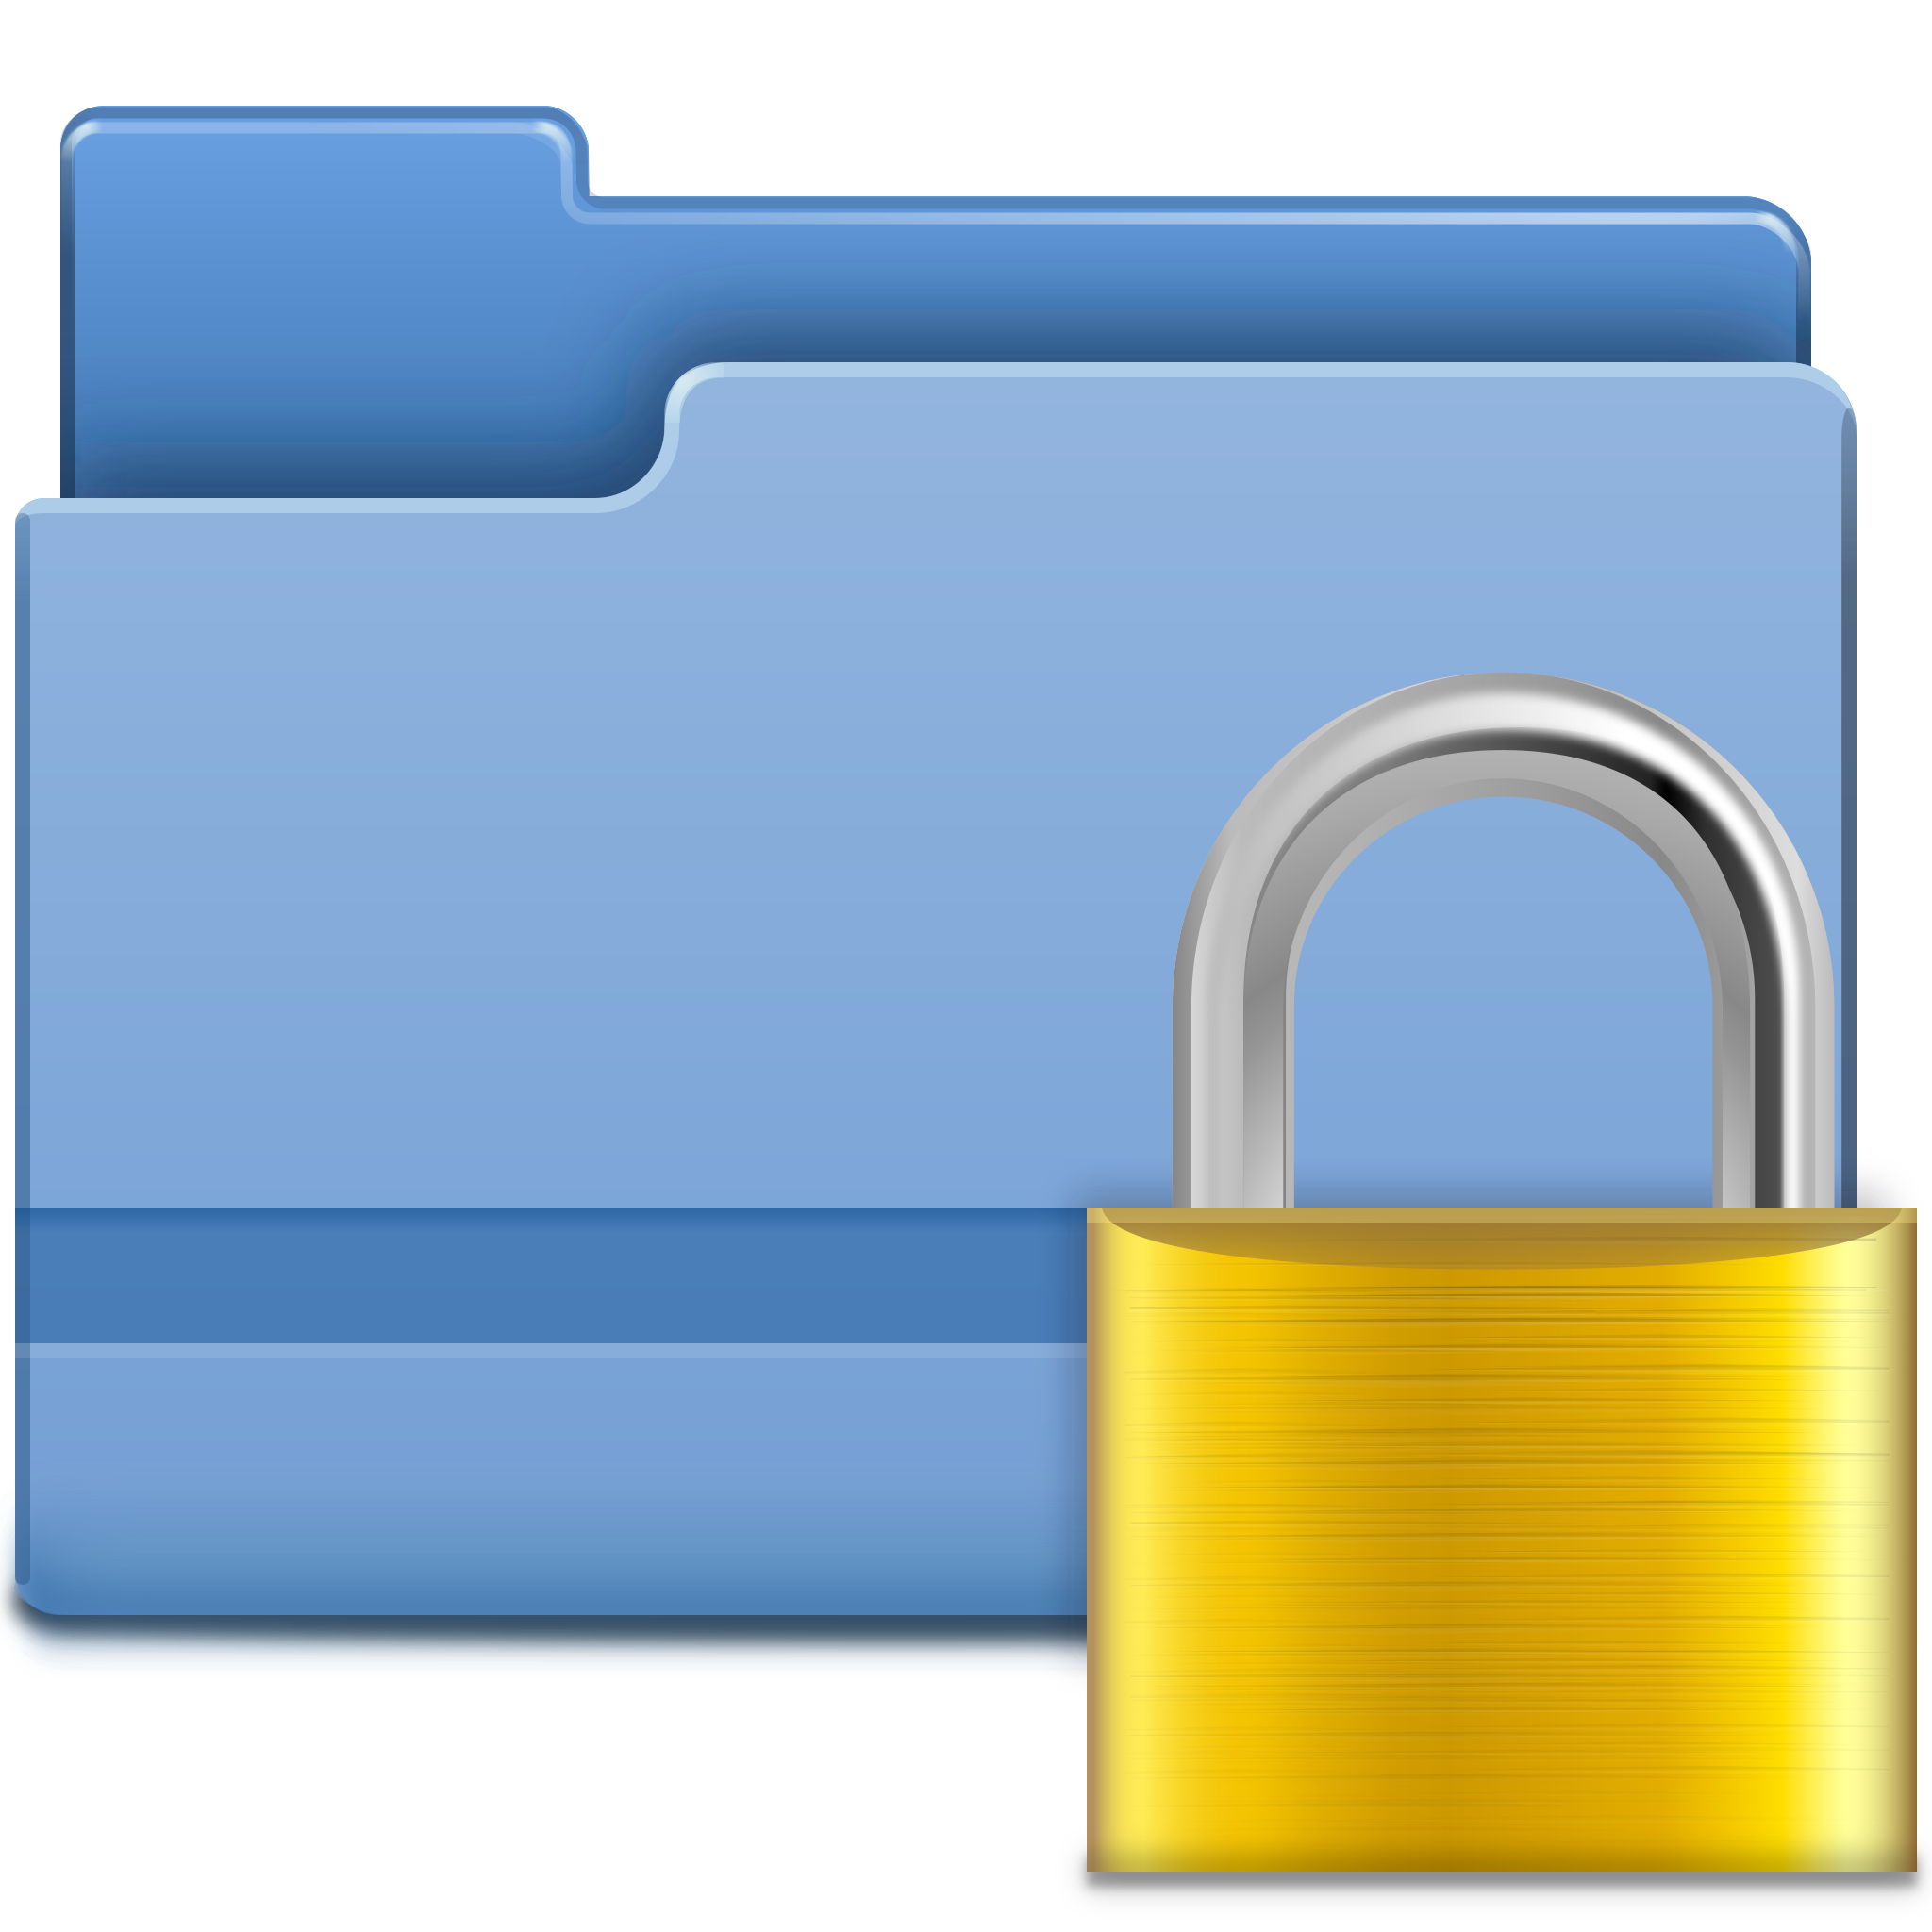 An image of a locked folder